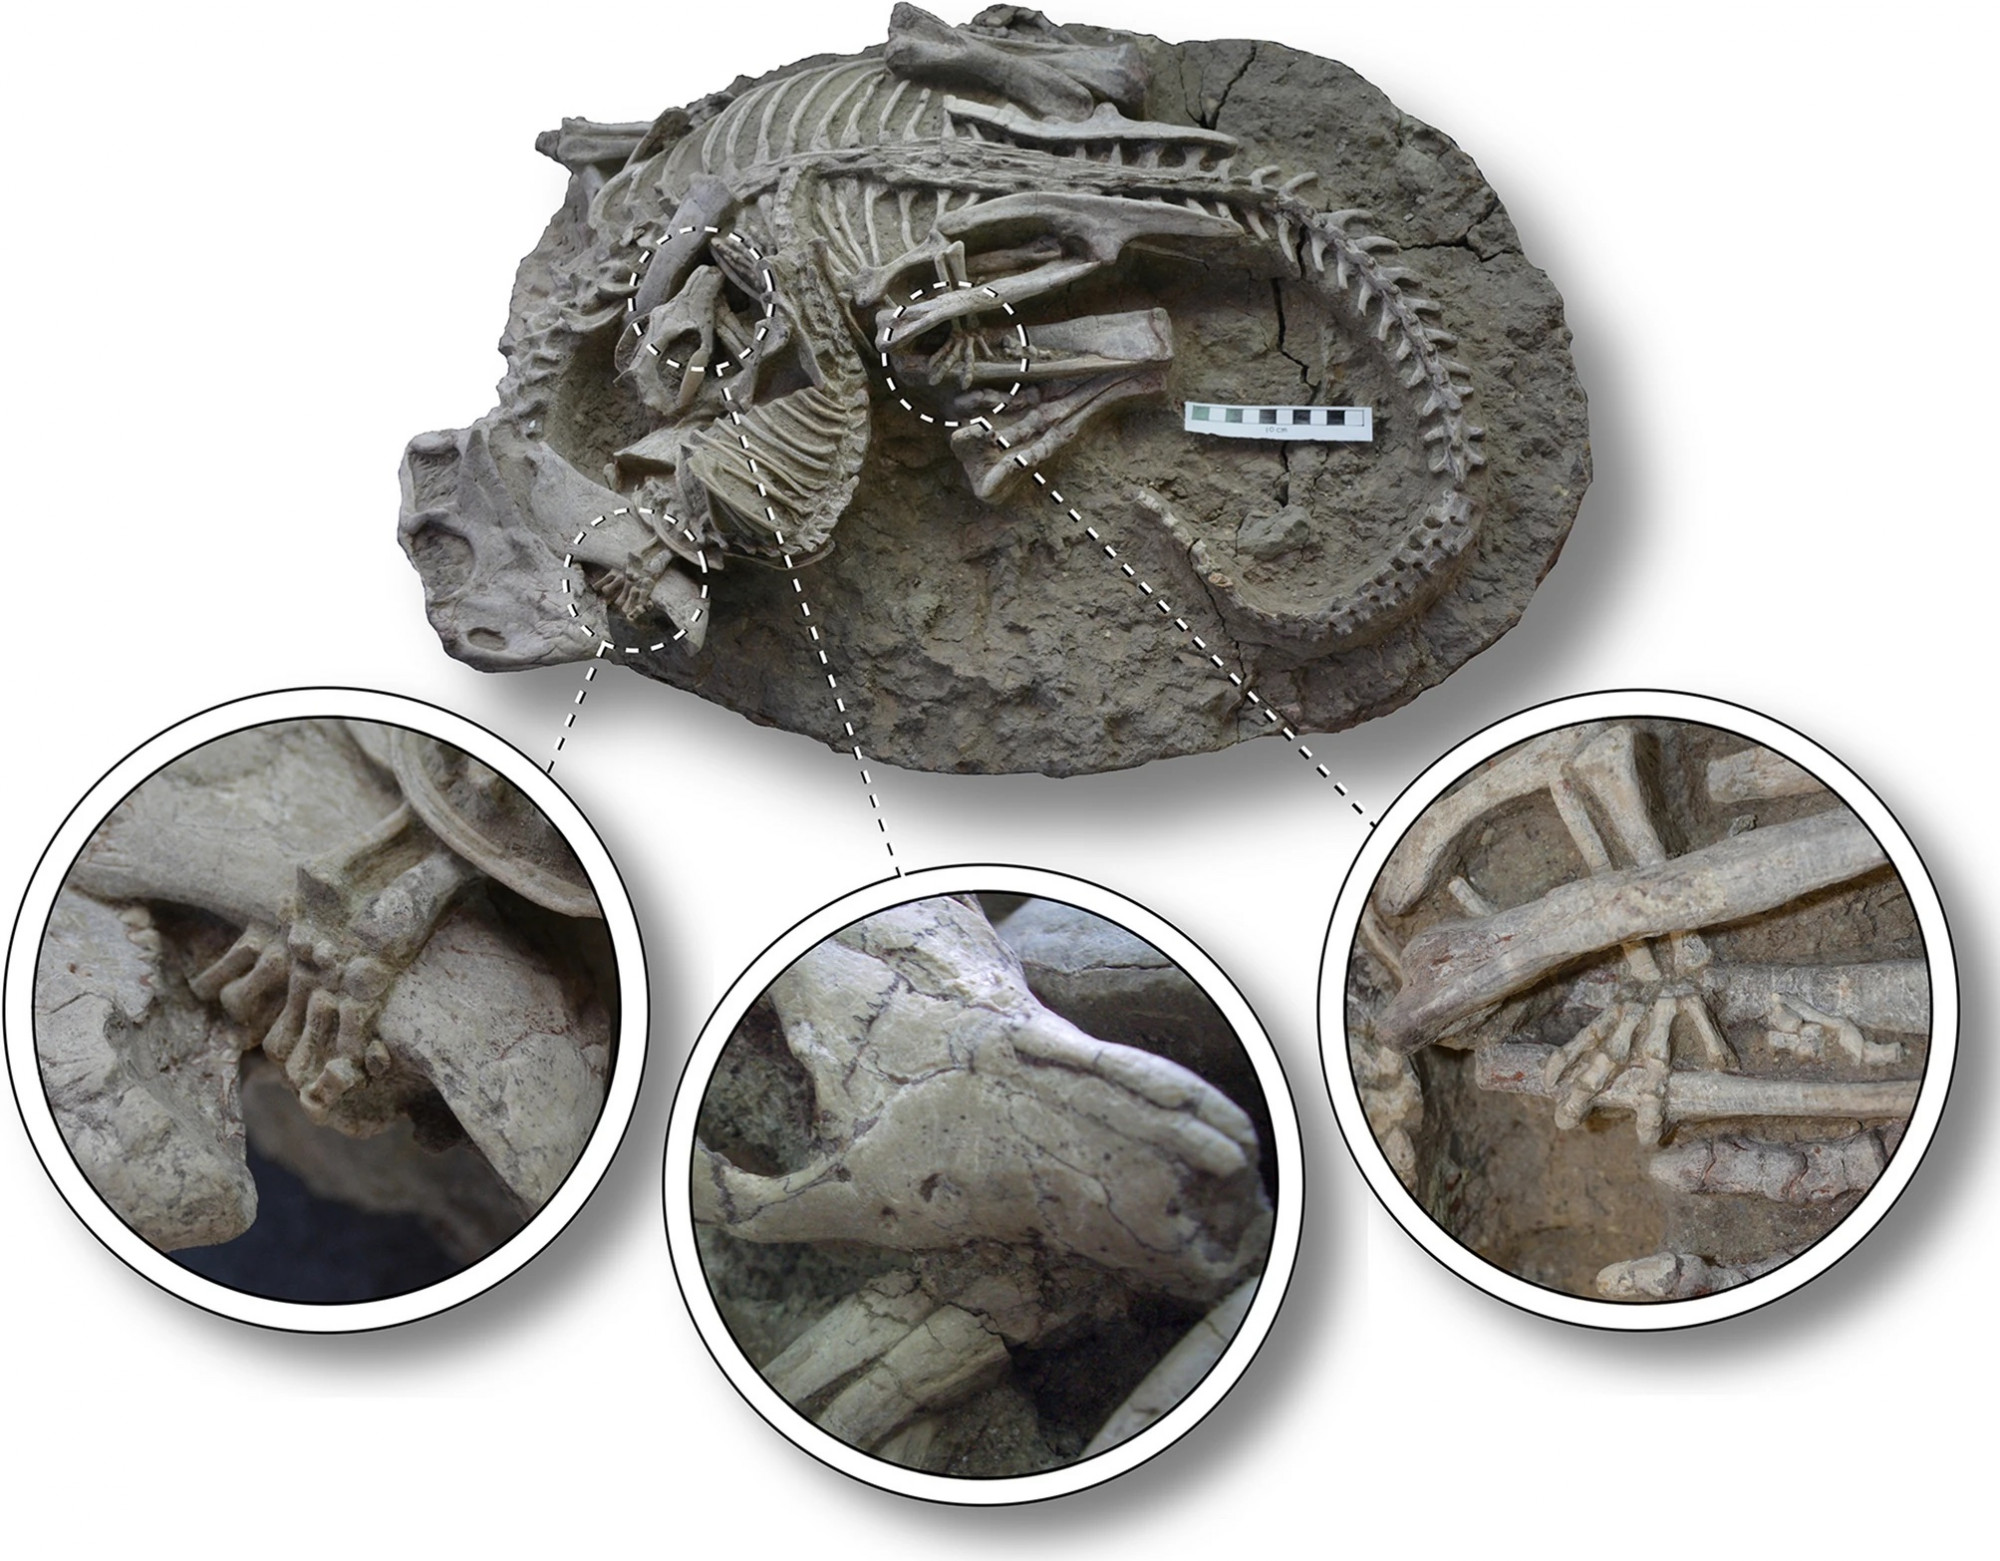 Psittacosaurus lujiatunensis és Repenomamus robustus a fosszíliába zárva